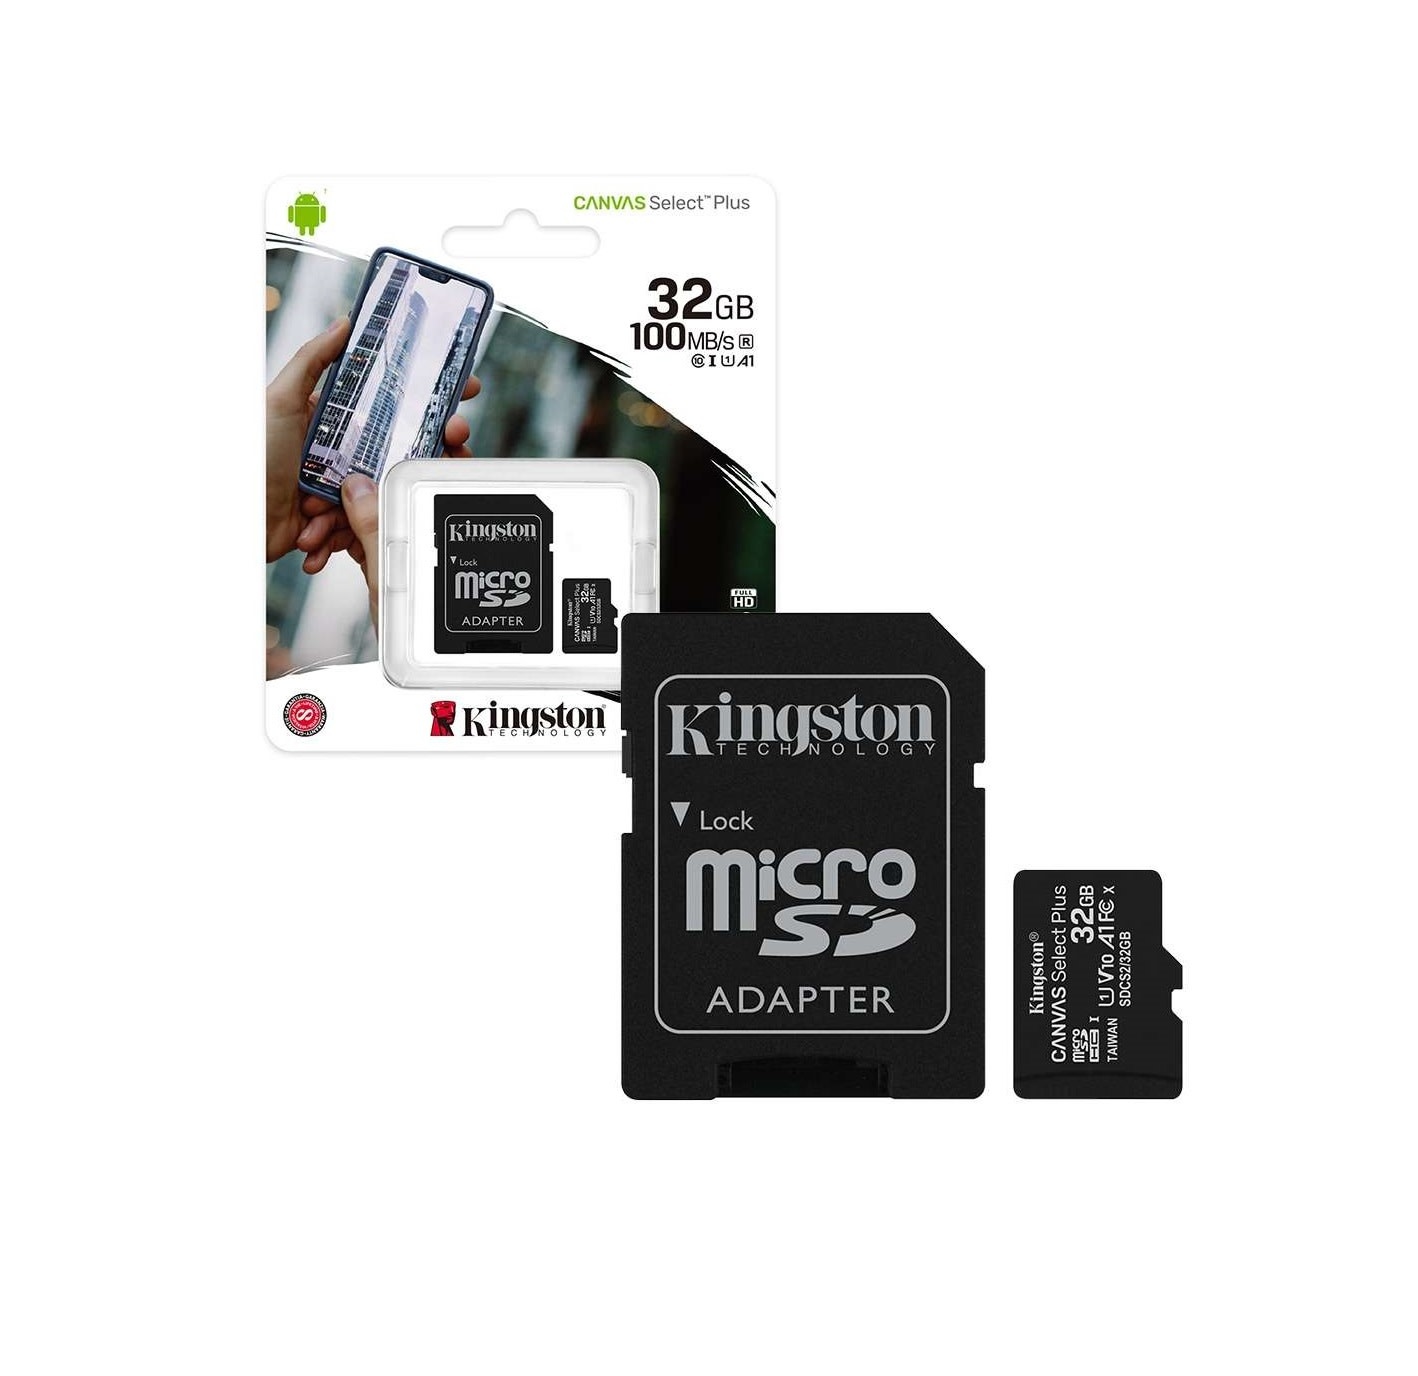 hoffelijkheid James Dyson forum Kingston 32Gb A1 100Mb/s Micro SDHC card incl. adapter | WIKA ICT |  Hardware & Support